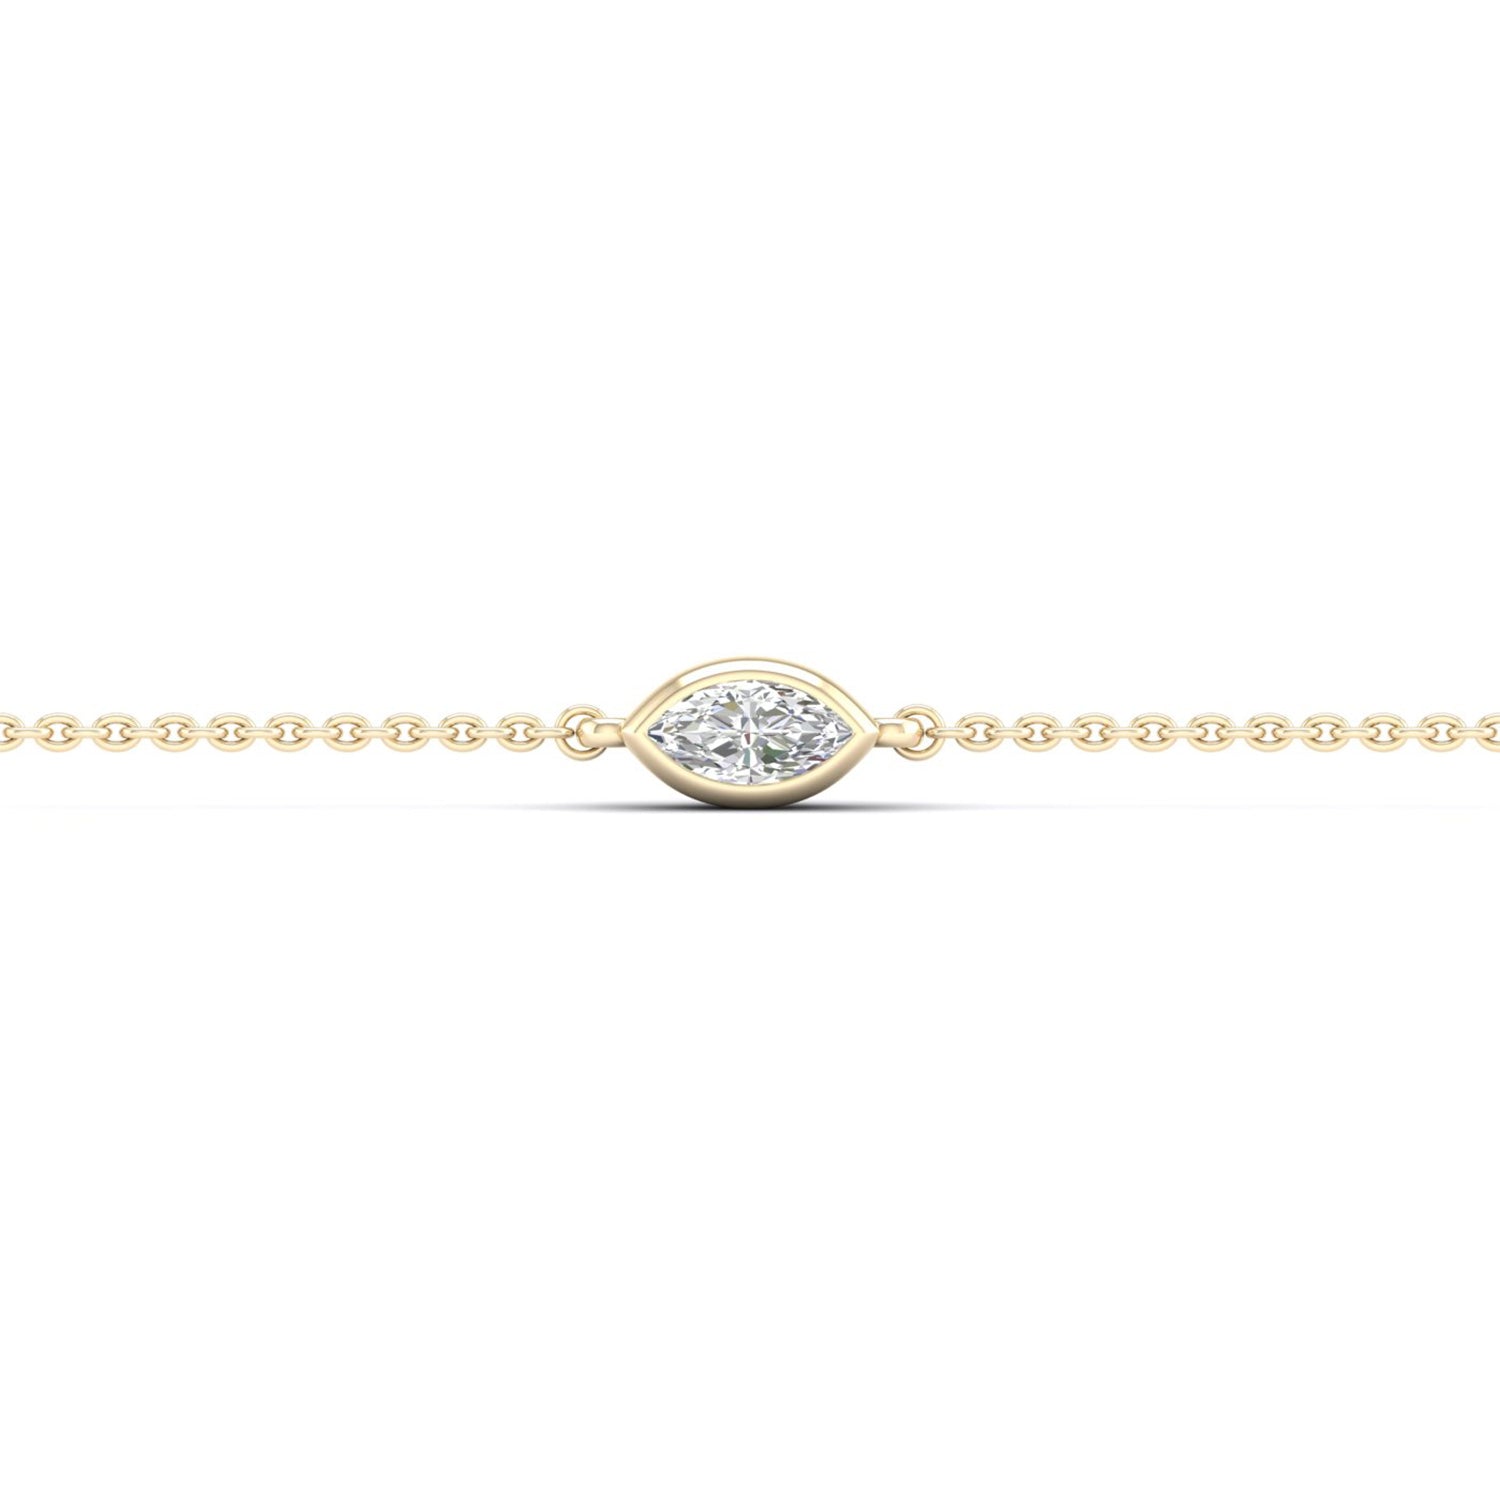 Marquise Diamond Glitter Bracelet_Product angle_1/5 Ct.  - 3